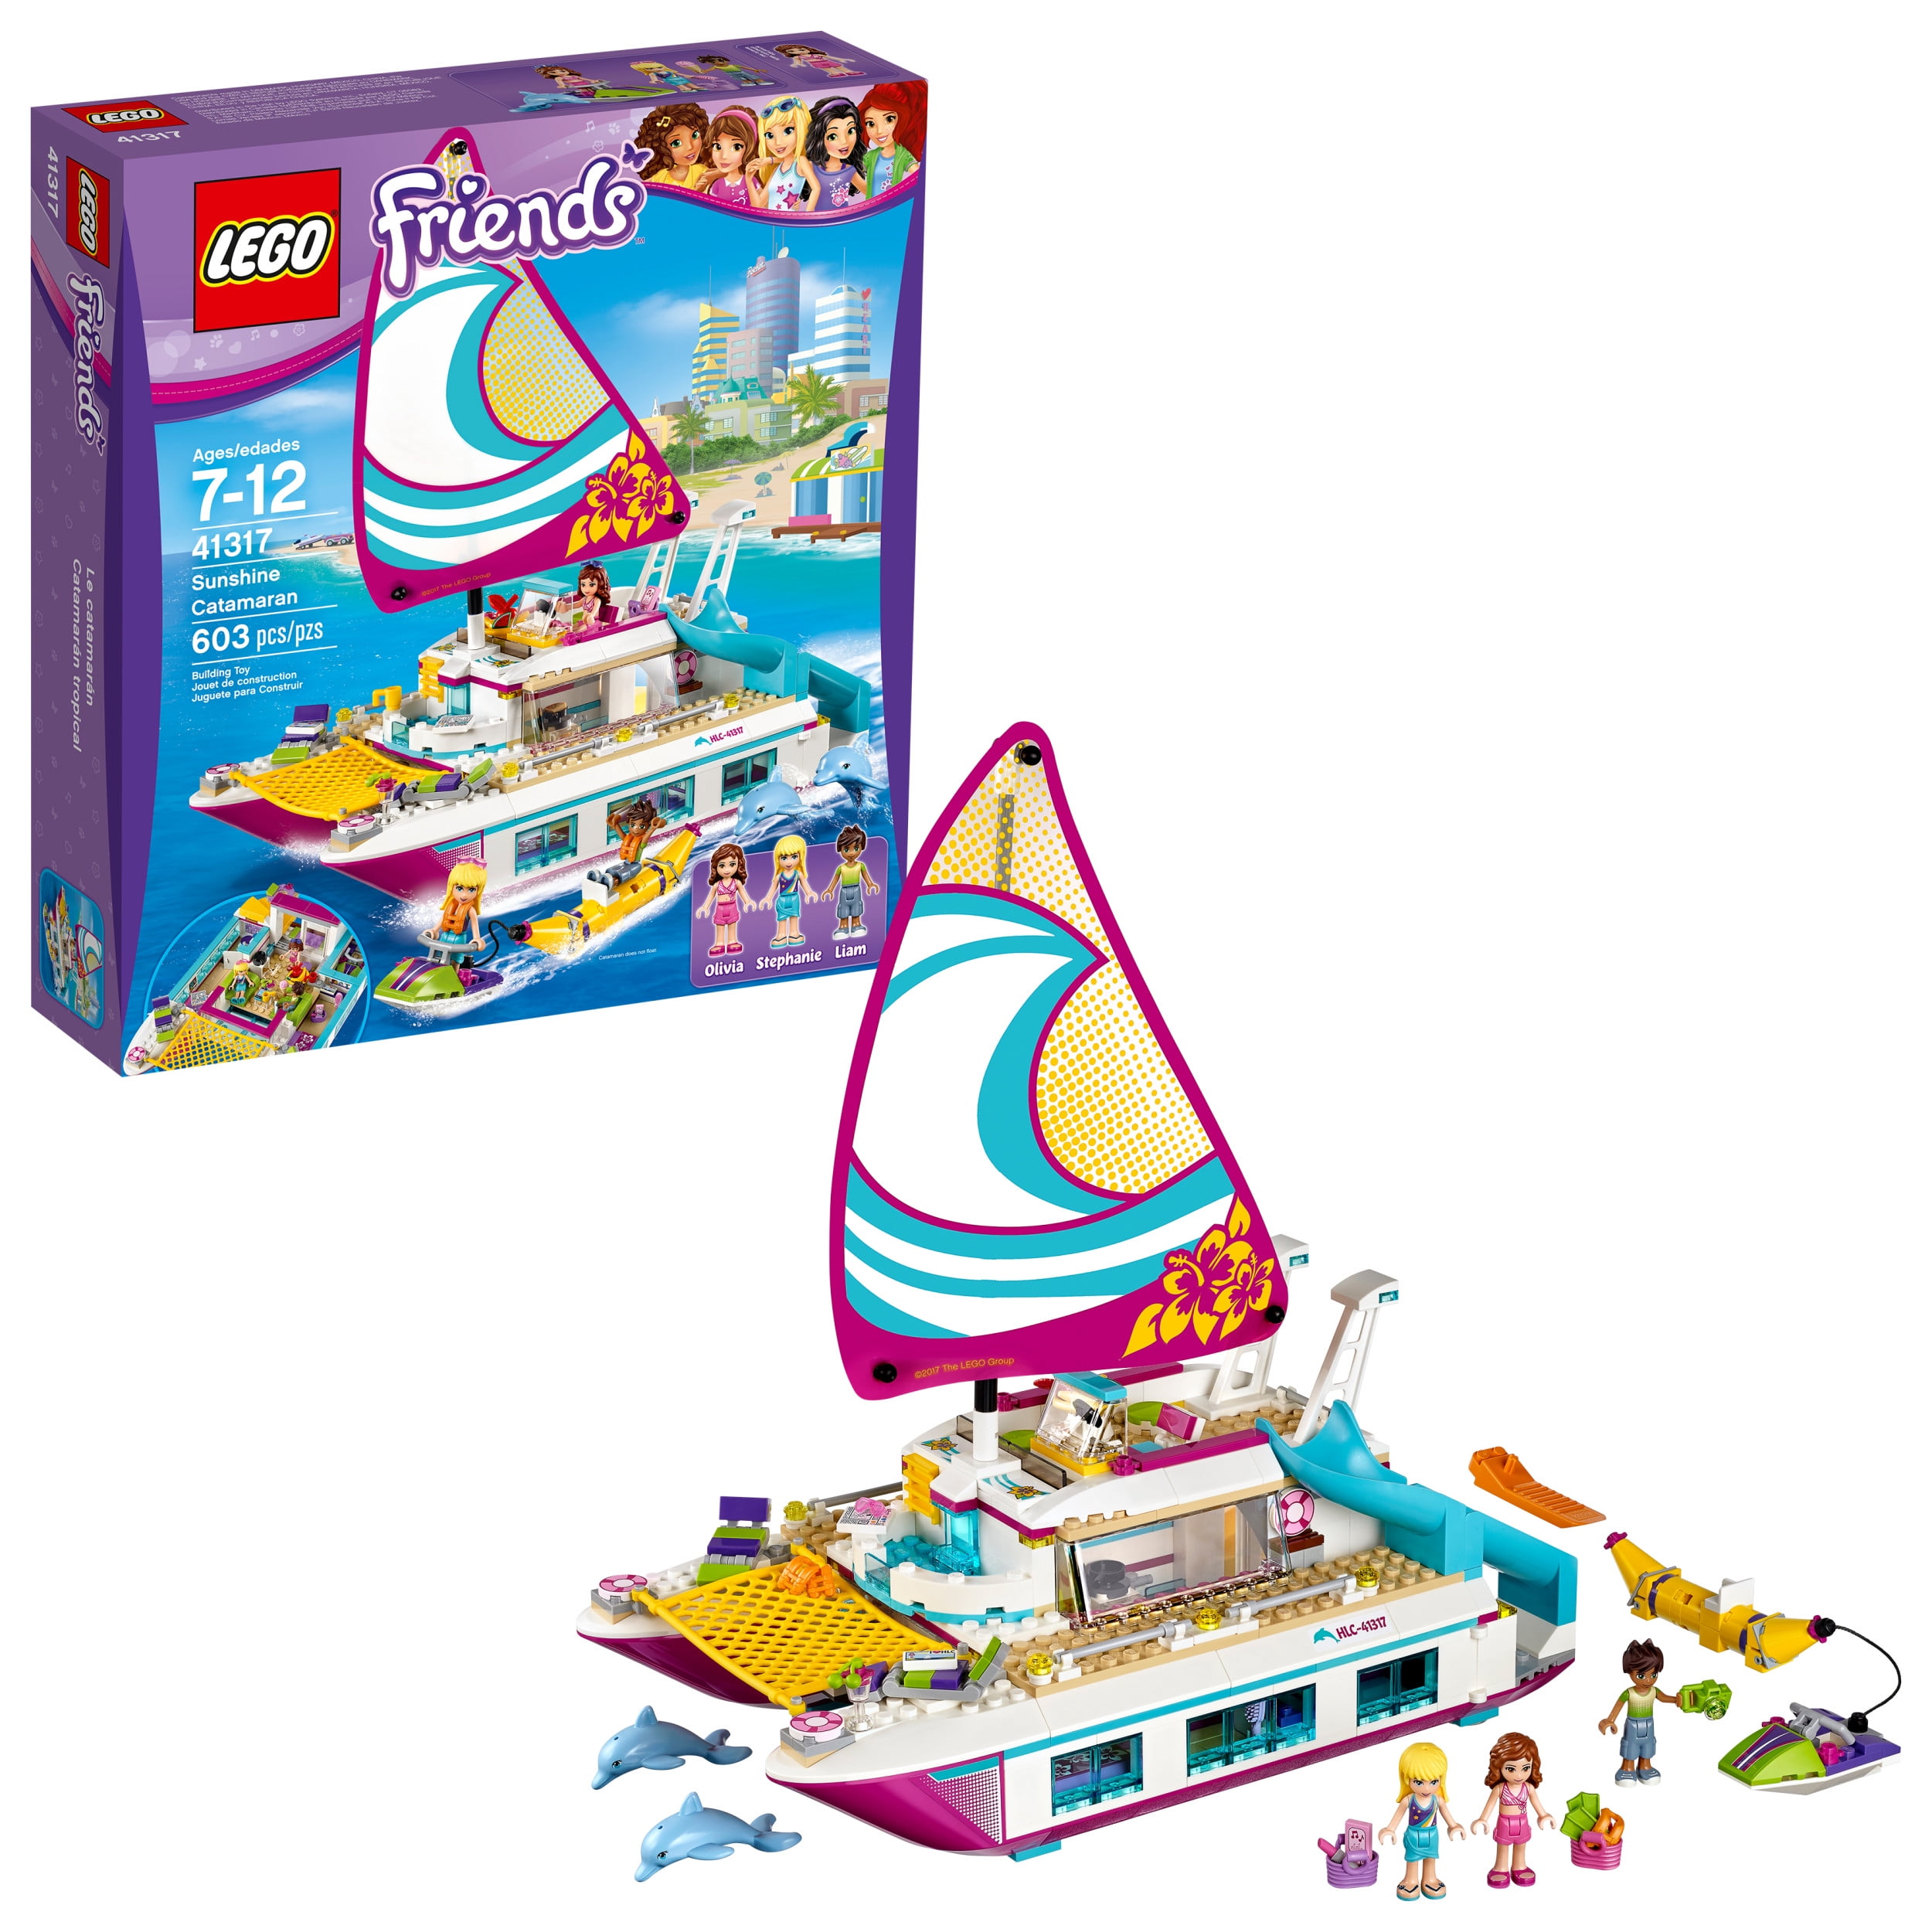 LEGO Friends Sunshine Catamaran 41317 Pieces) -